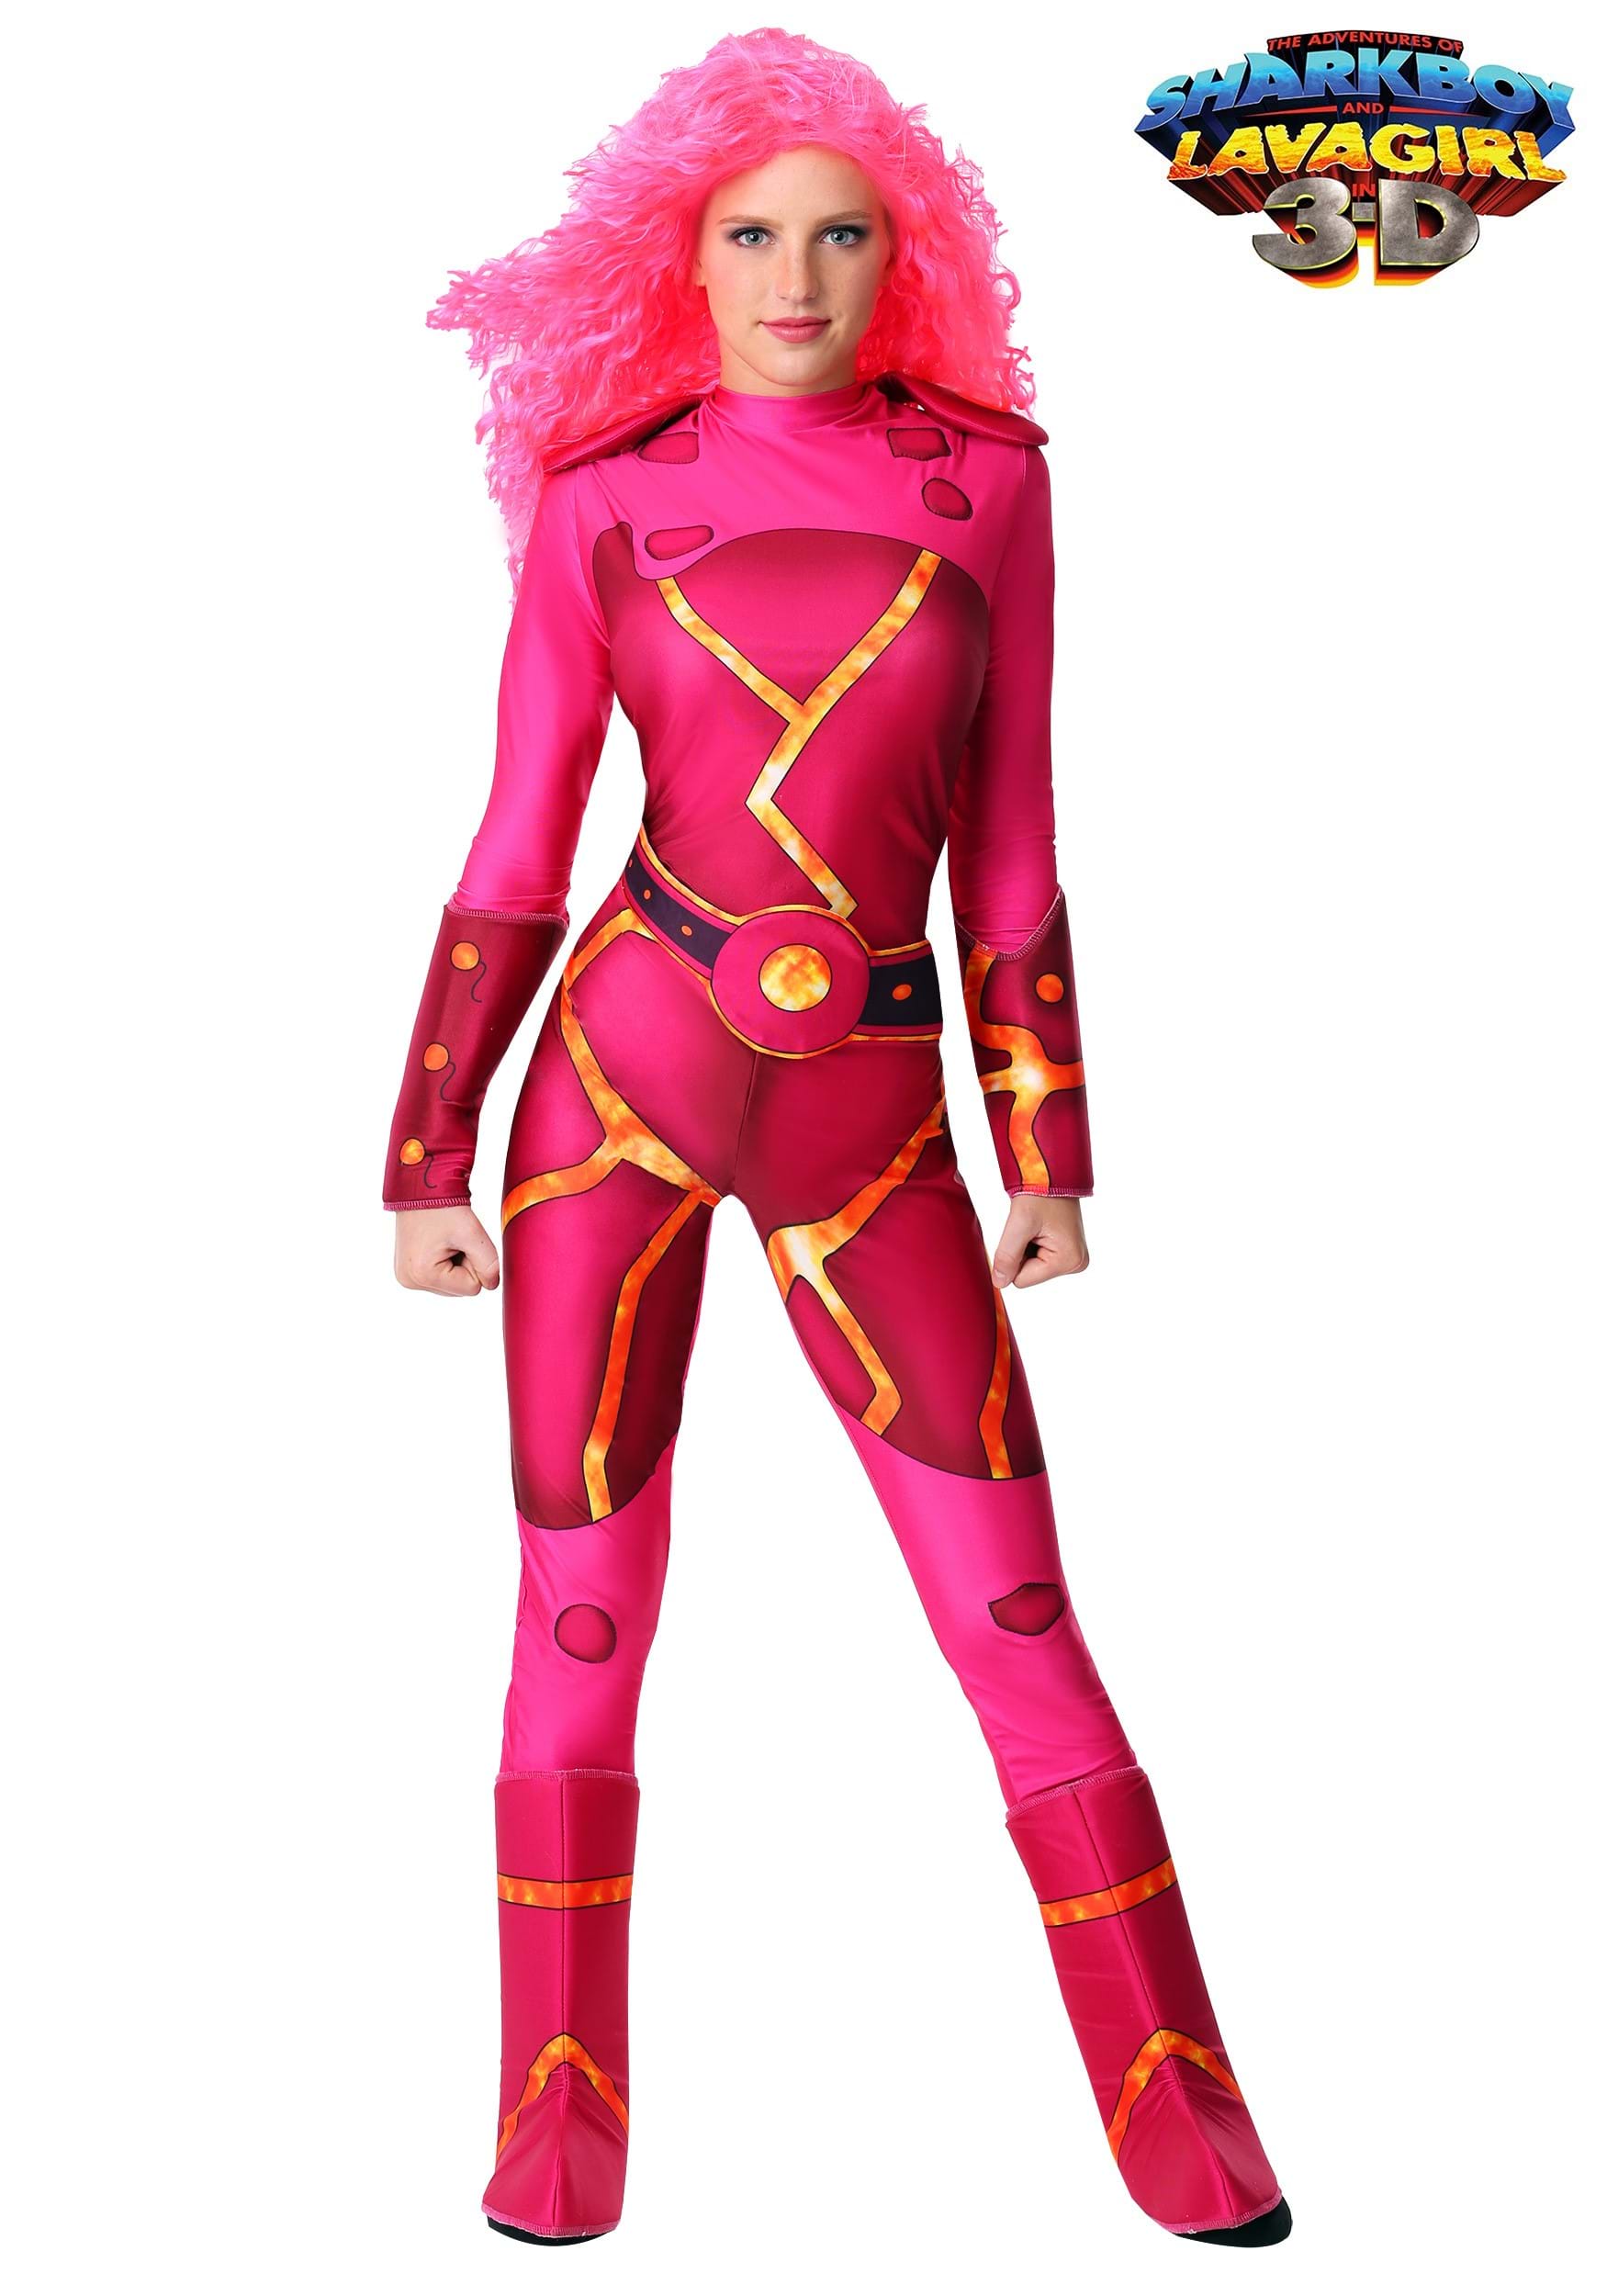 Powerpuff Girls Costume Adults Online Shopping Save 56 Jlcatjgobmx 